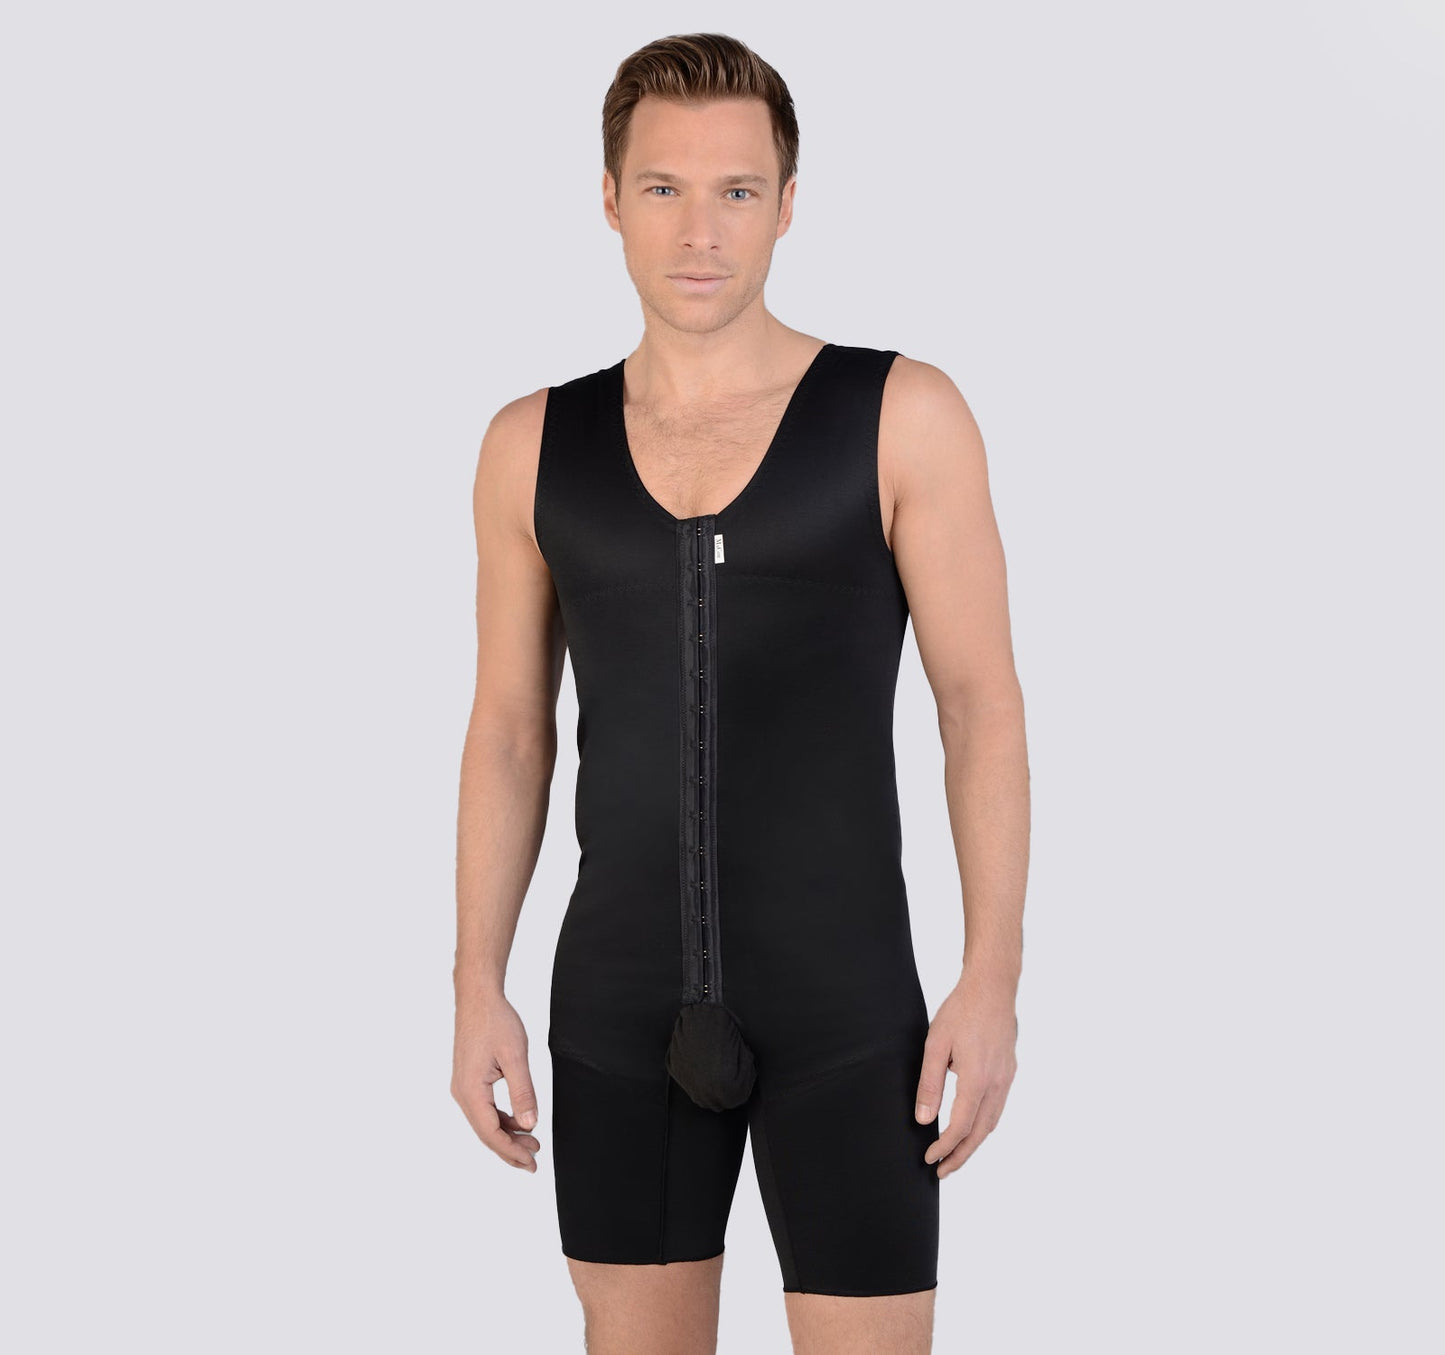 Macom Men's Full-Body Compression Garment (Black)